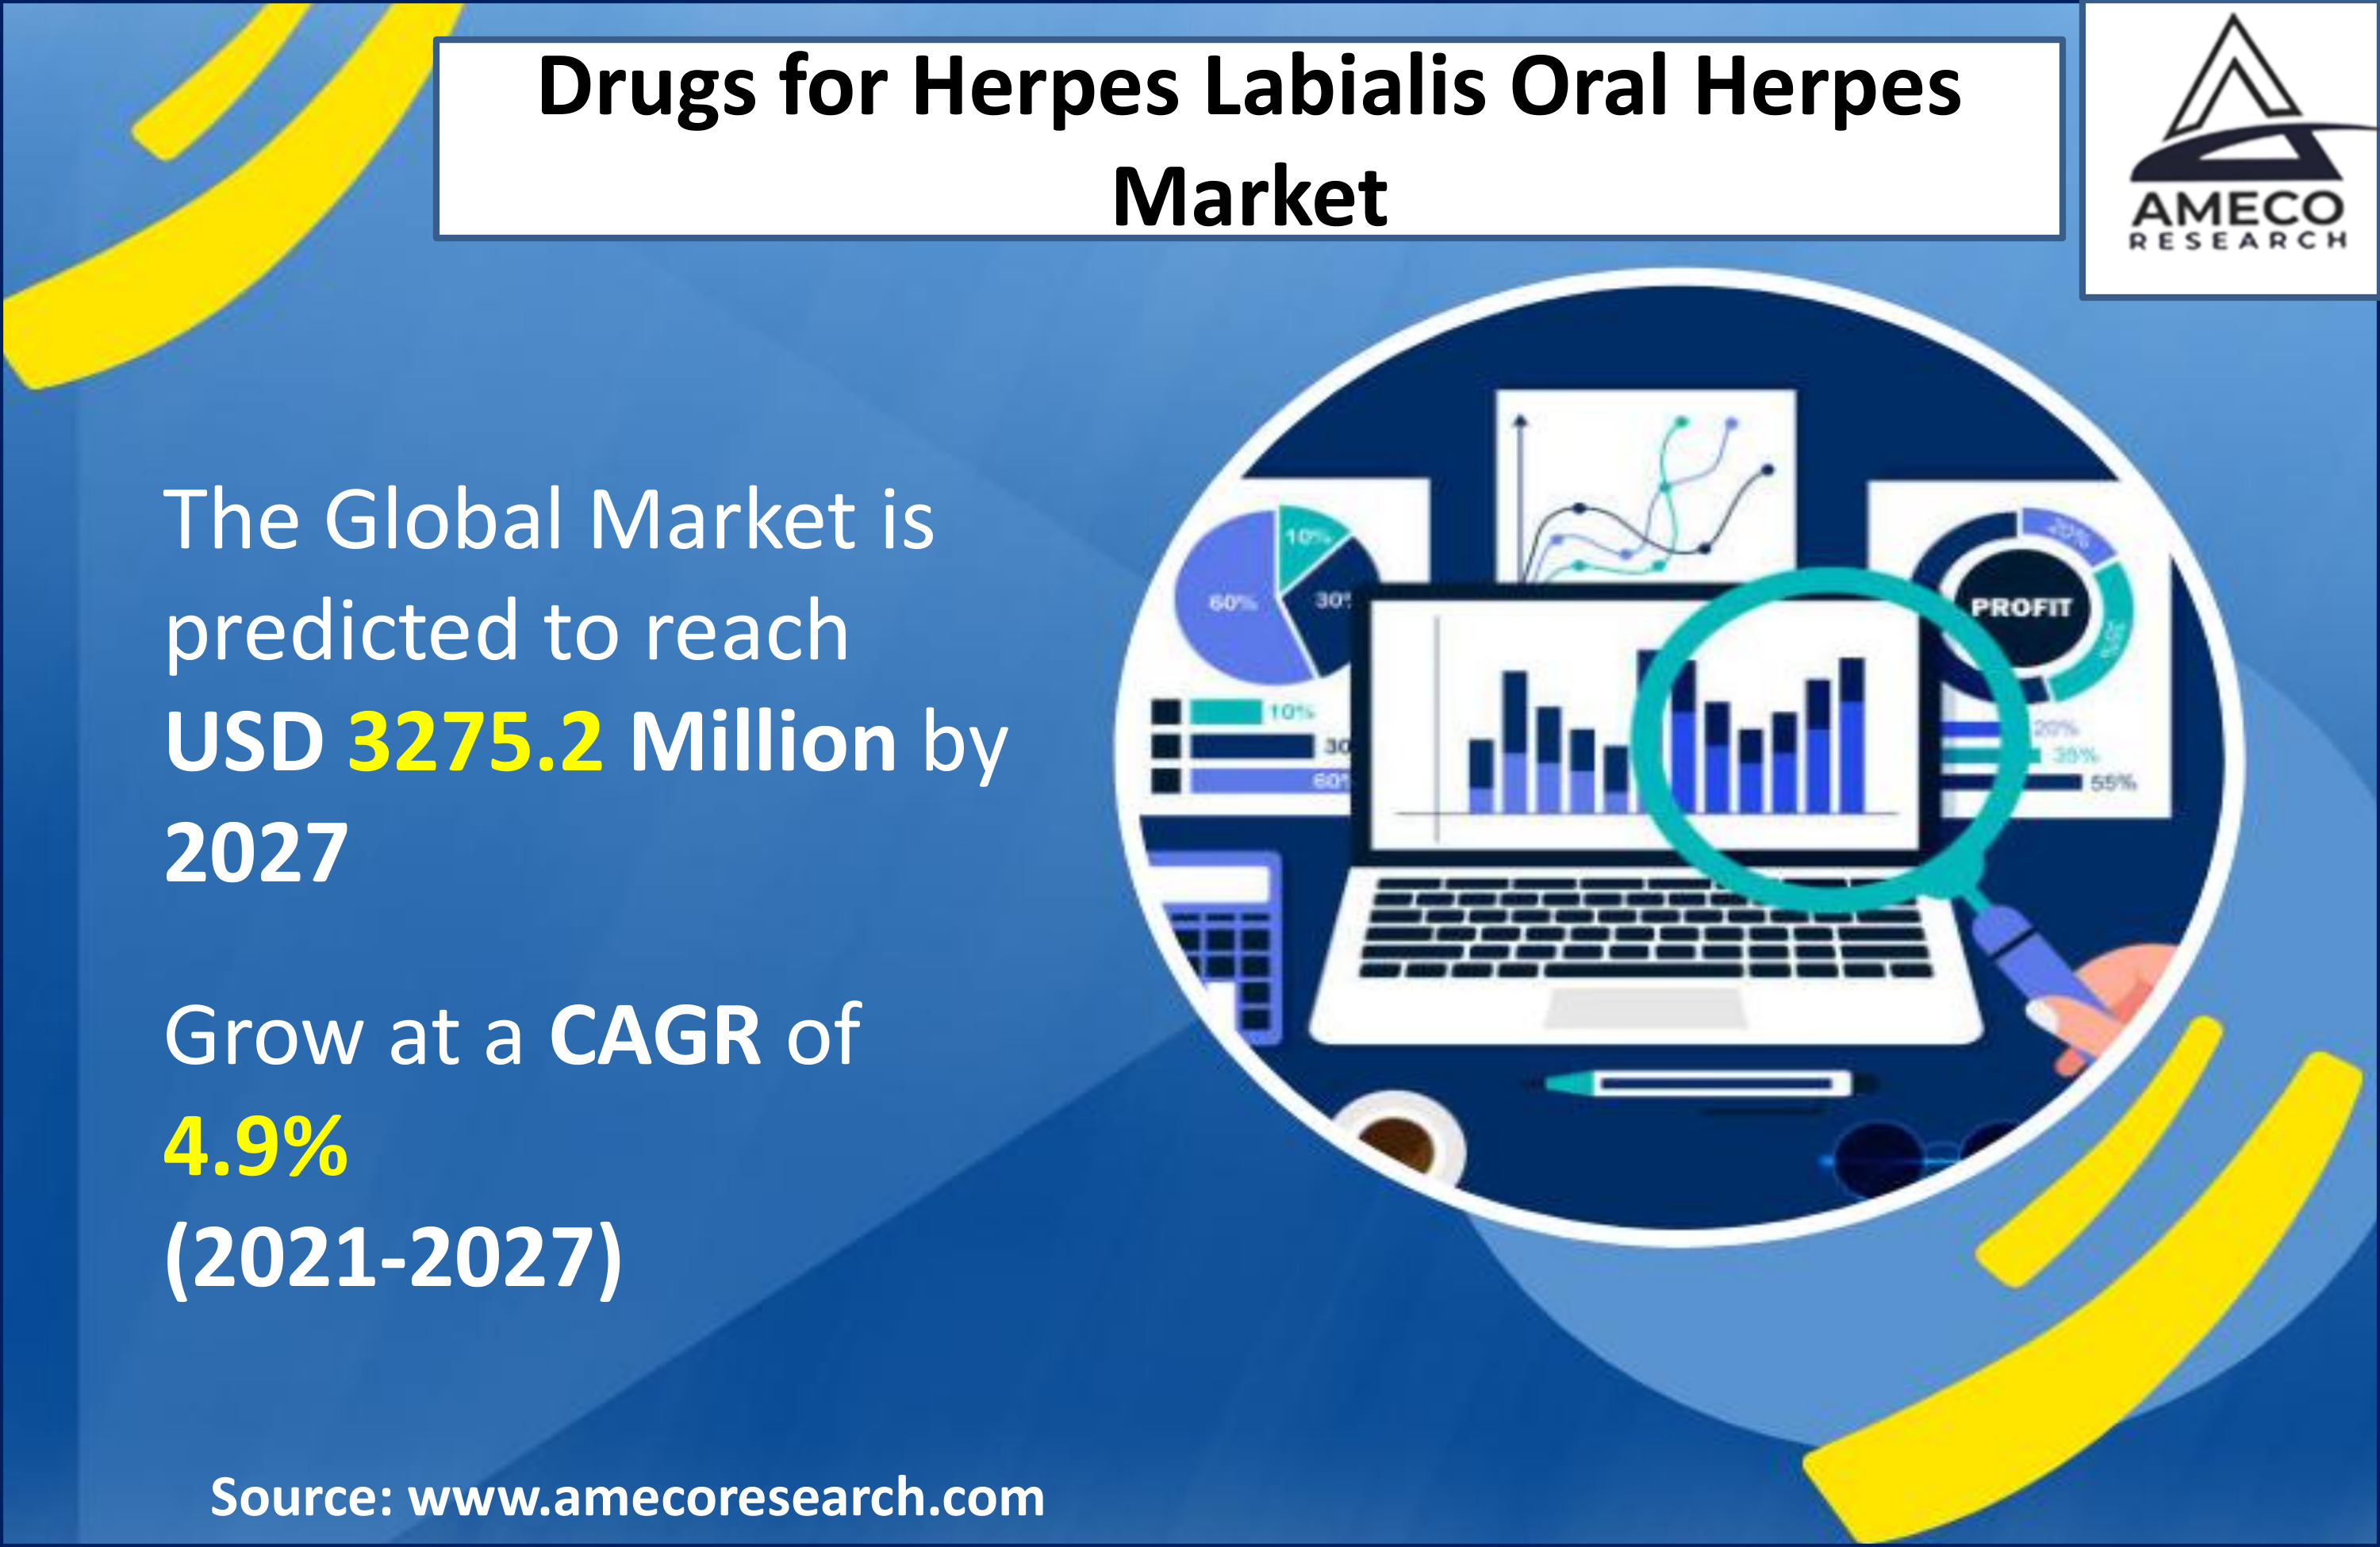 Drugs for Herpes Labialis Oral Herpes Market